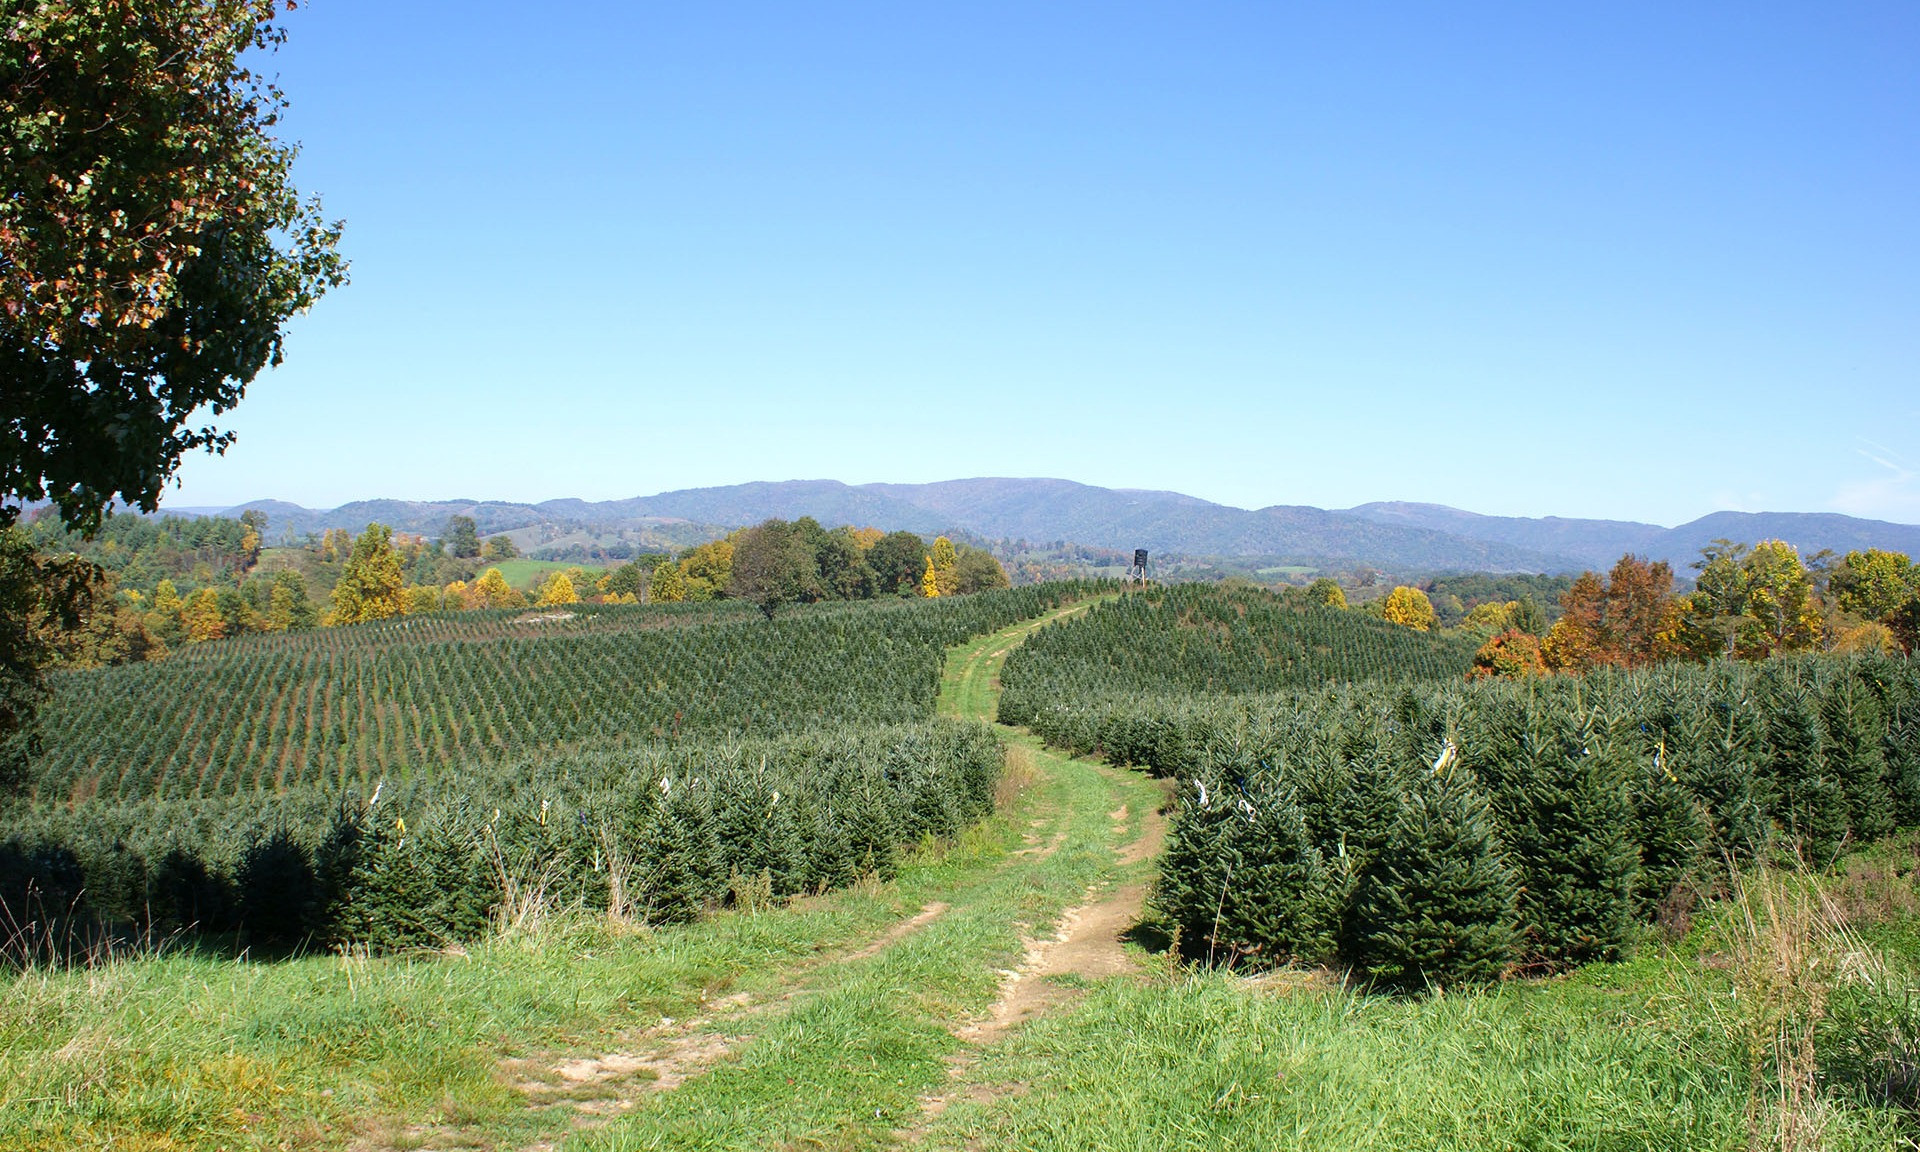 Ashe County Christmas Trees